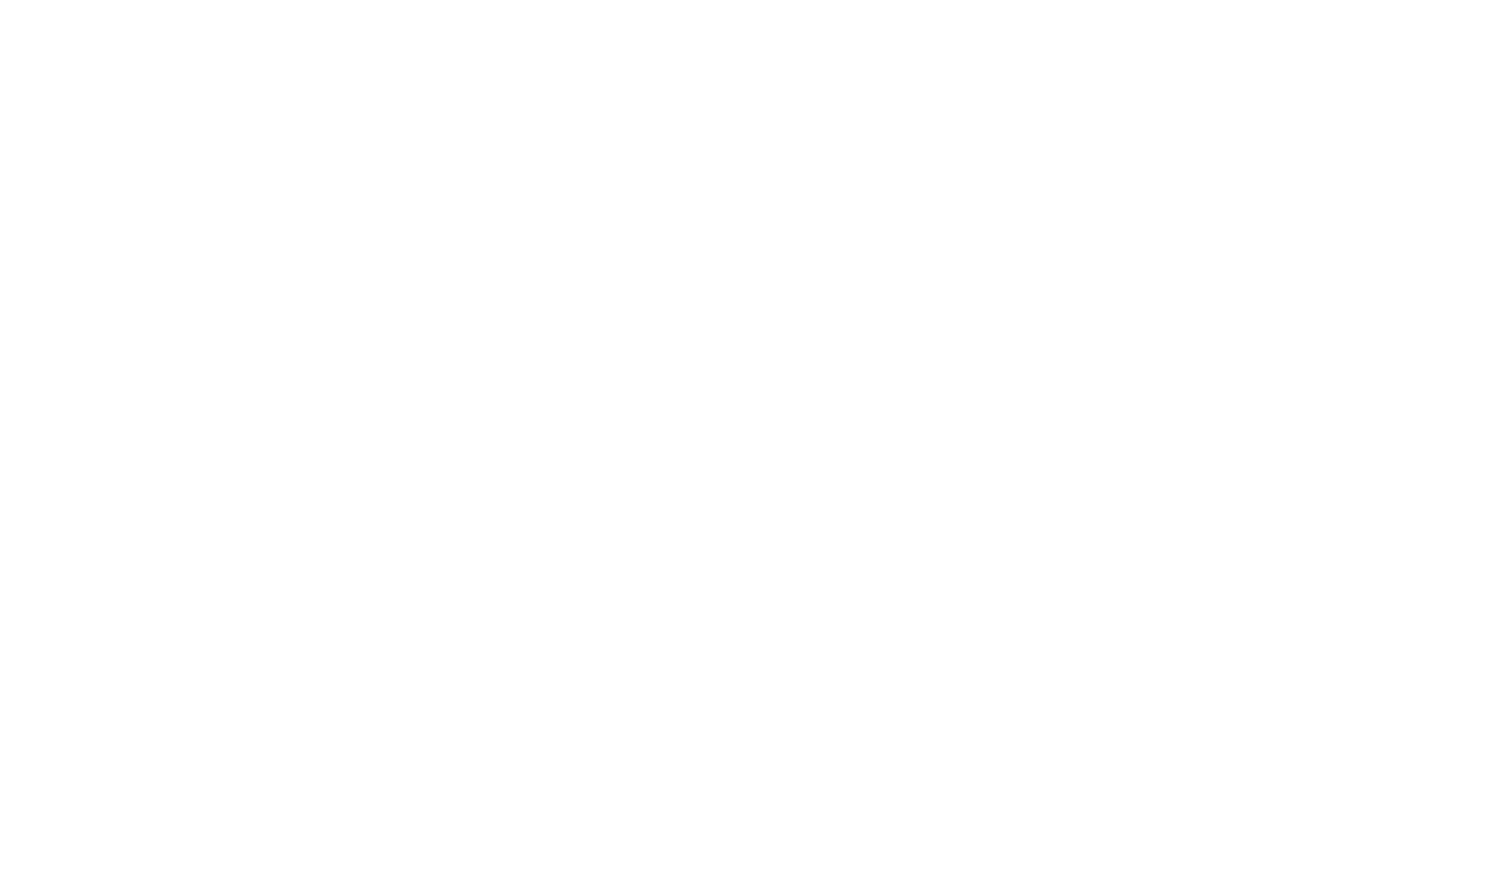 Thomas Knight Video 